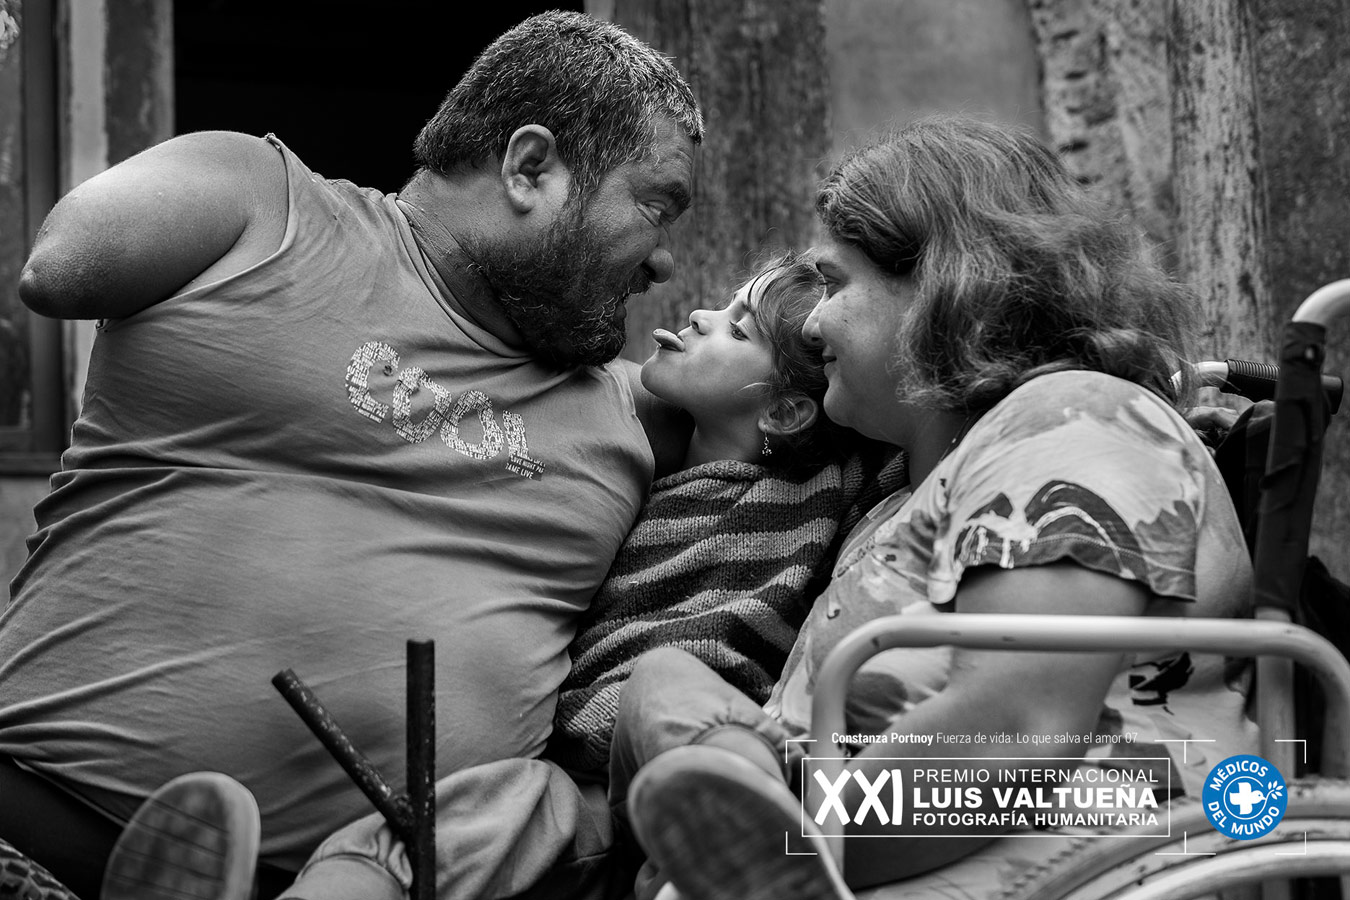 © Constanza Portnoy, Luis Valtueña International Humanitarian Photography Award